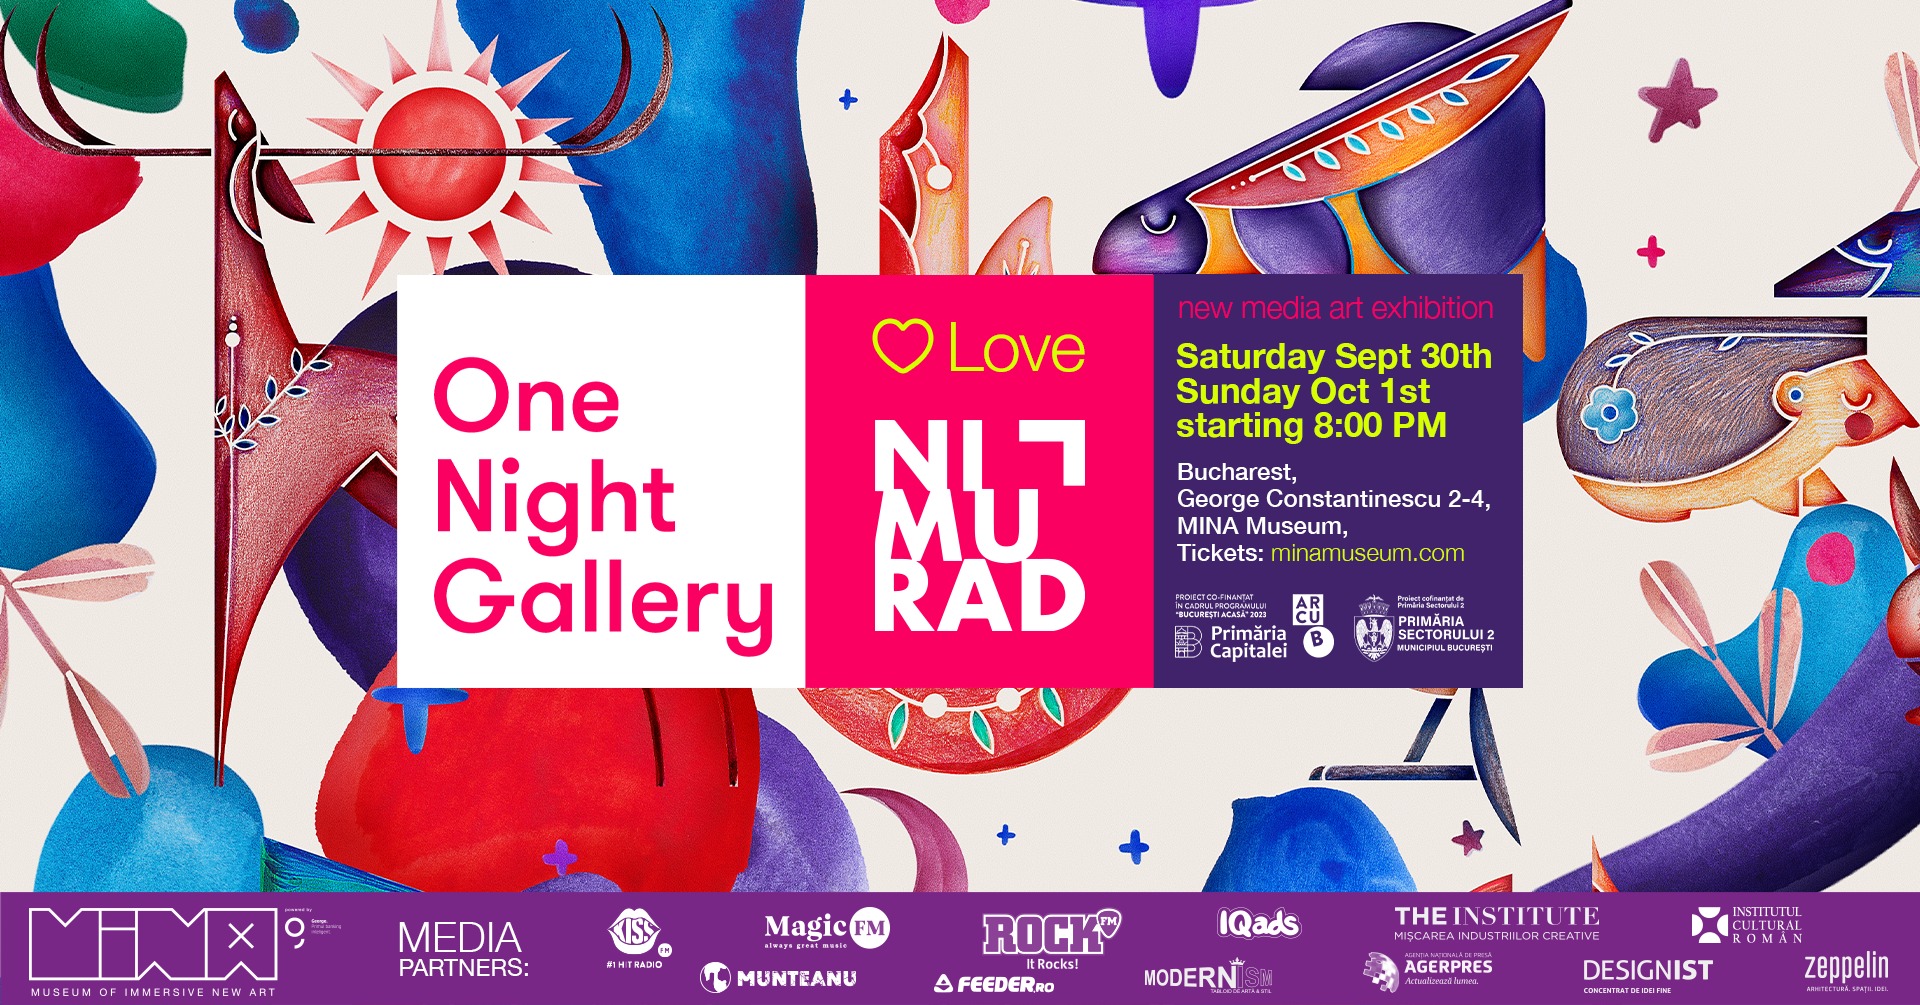 One Night Gallery Love Nimurad